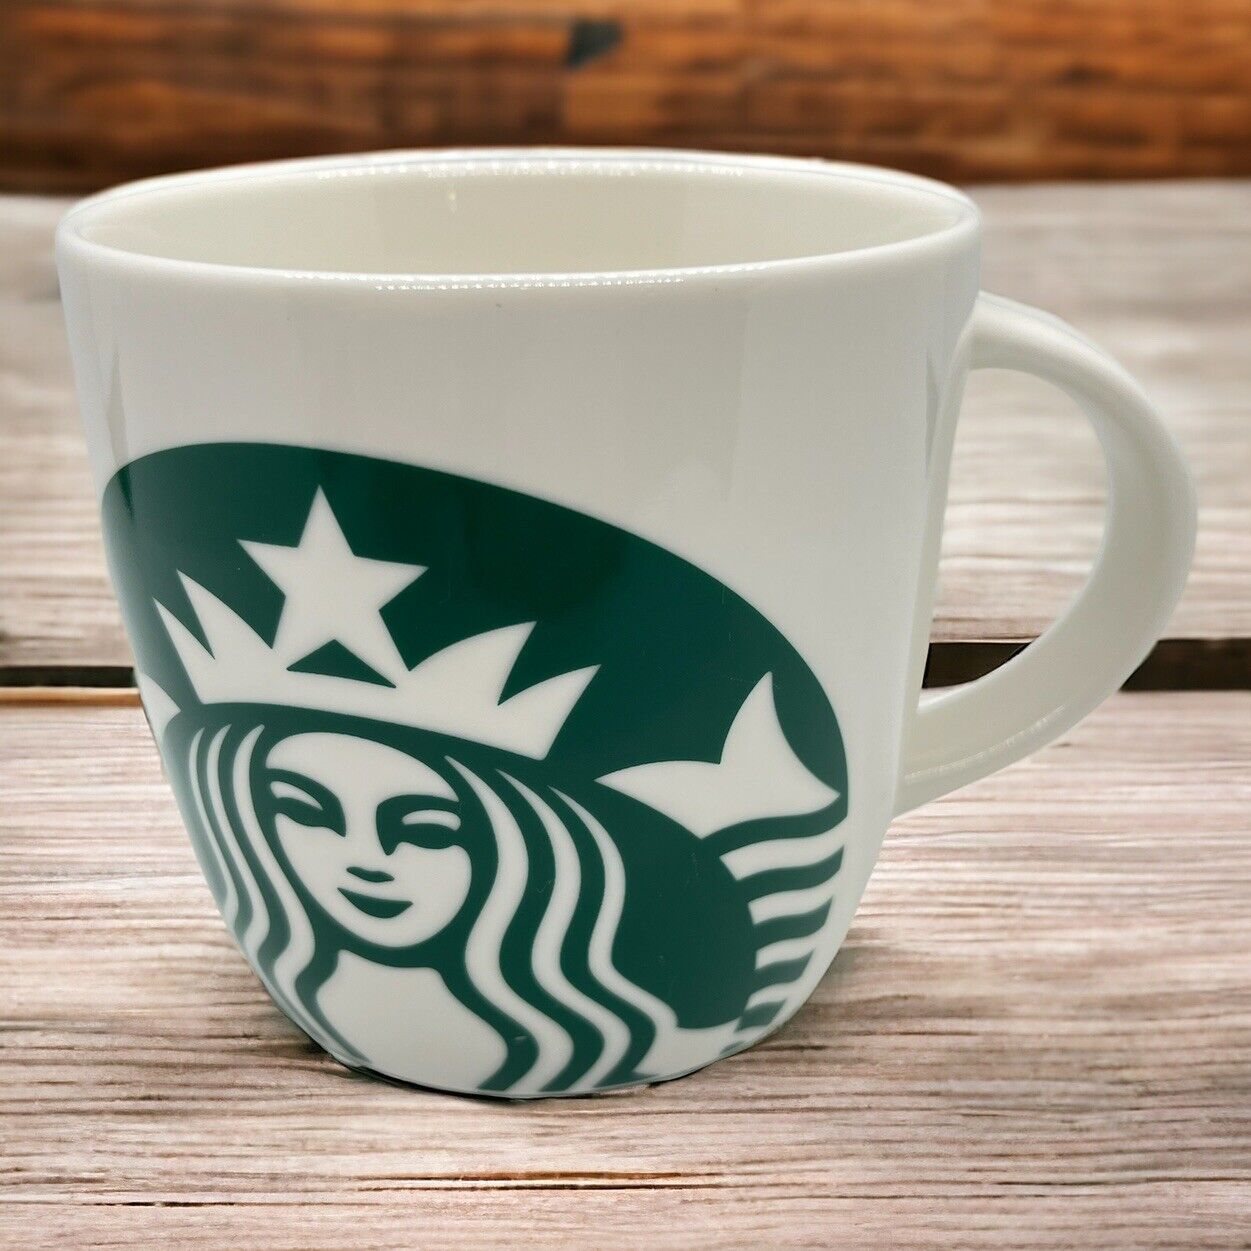 2017 Starbucks Coffee Mug Mermaid Siren Logo 14 oz Cup Pre-owned